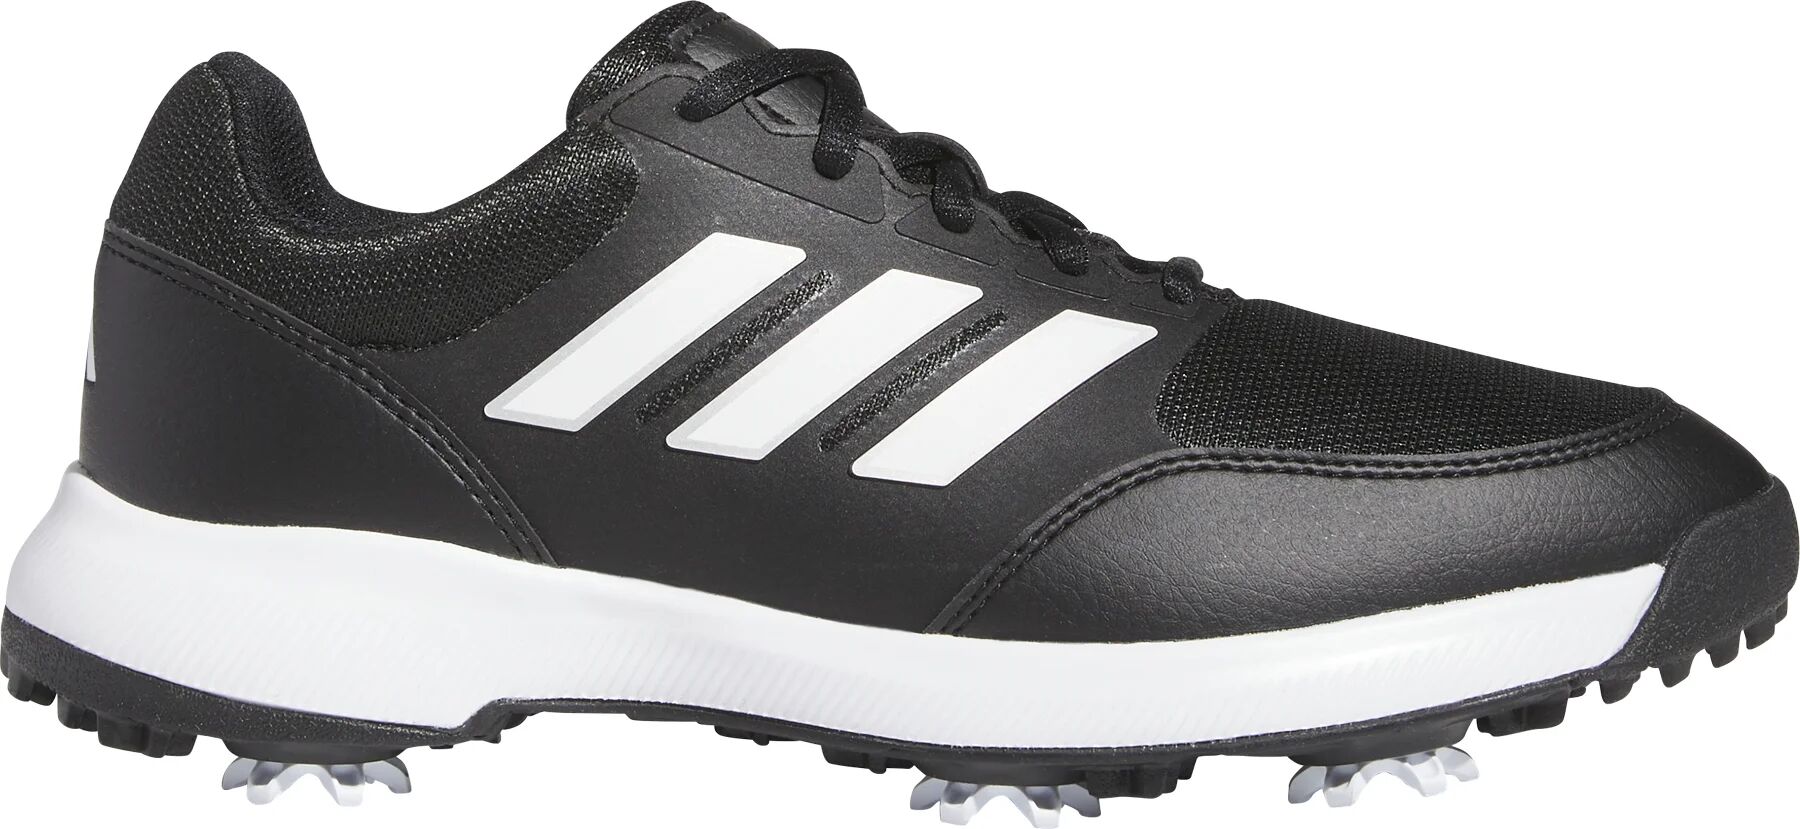 adidas Womens Tech Response 3.0 Golf Shoes - Core Black/Cloud White/Silver Metallic - 11 - MEDIUM